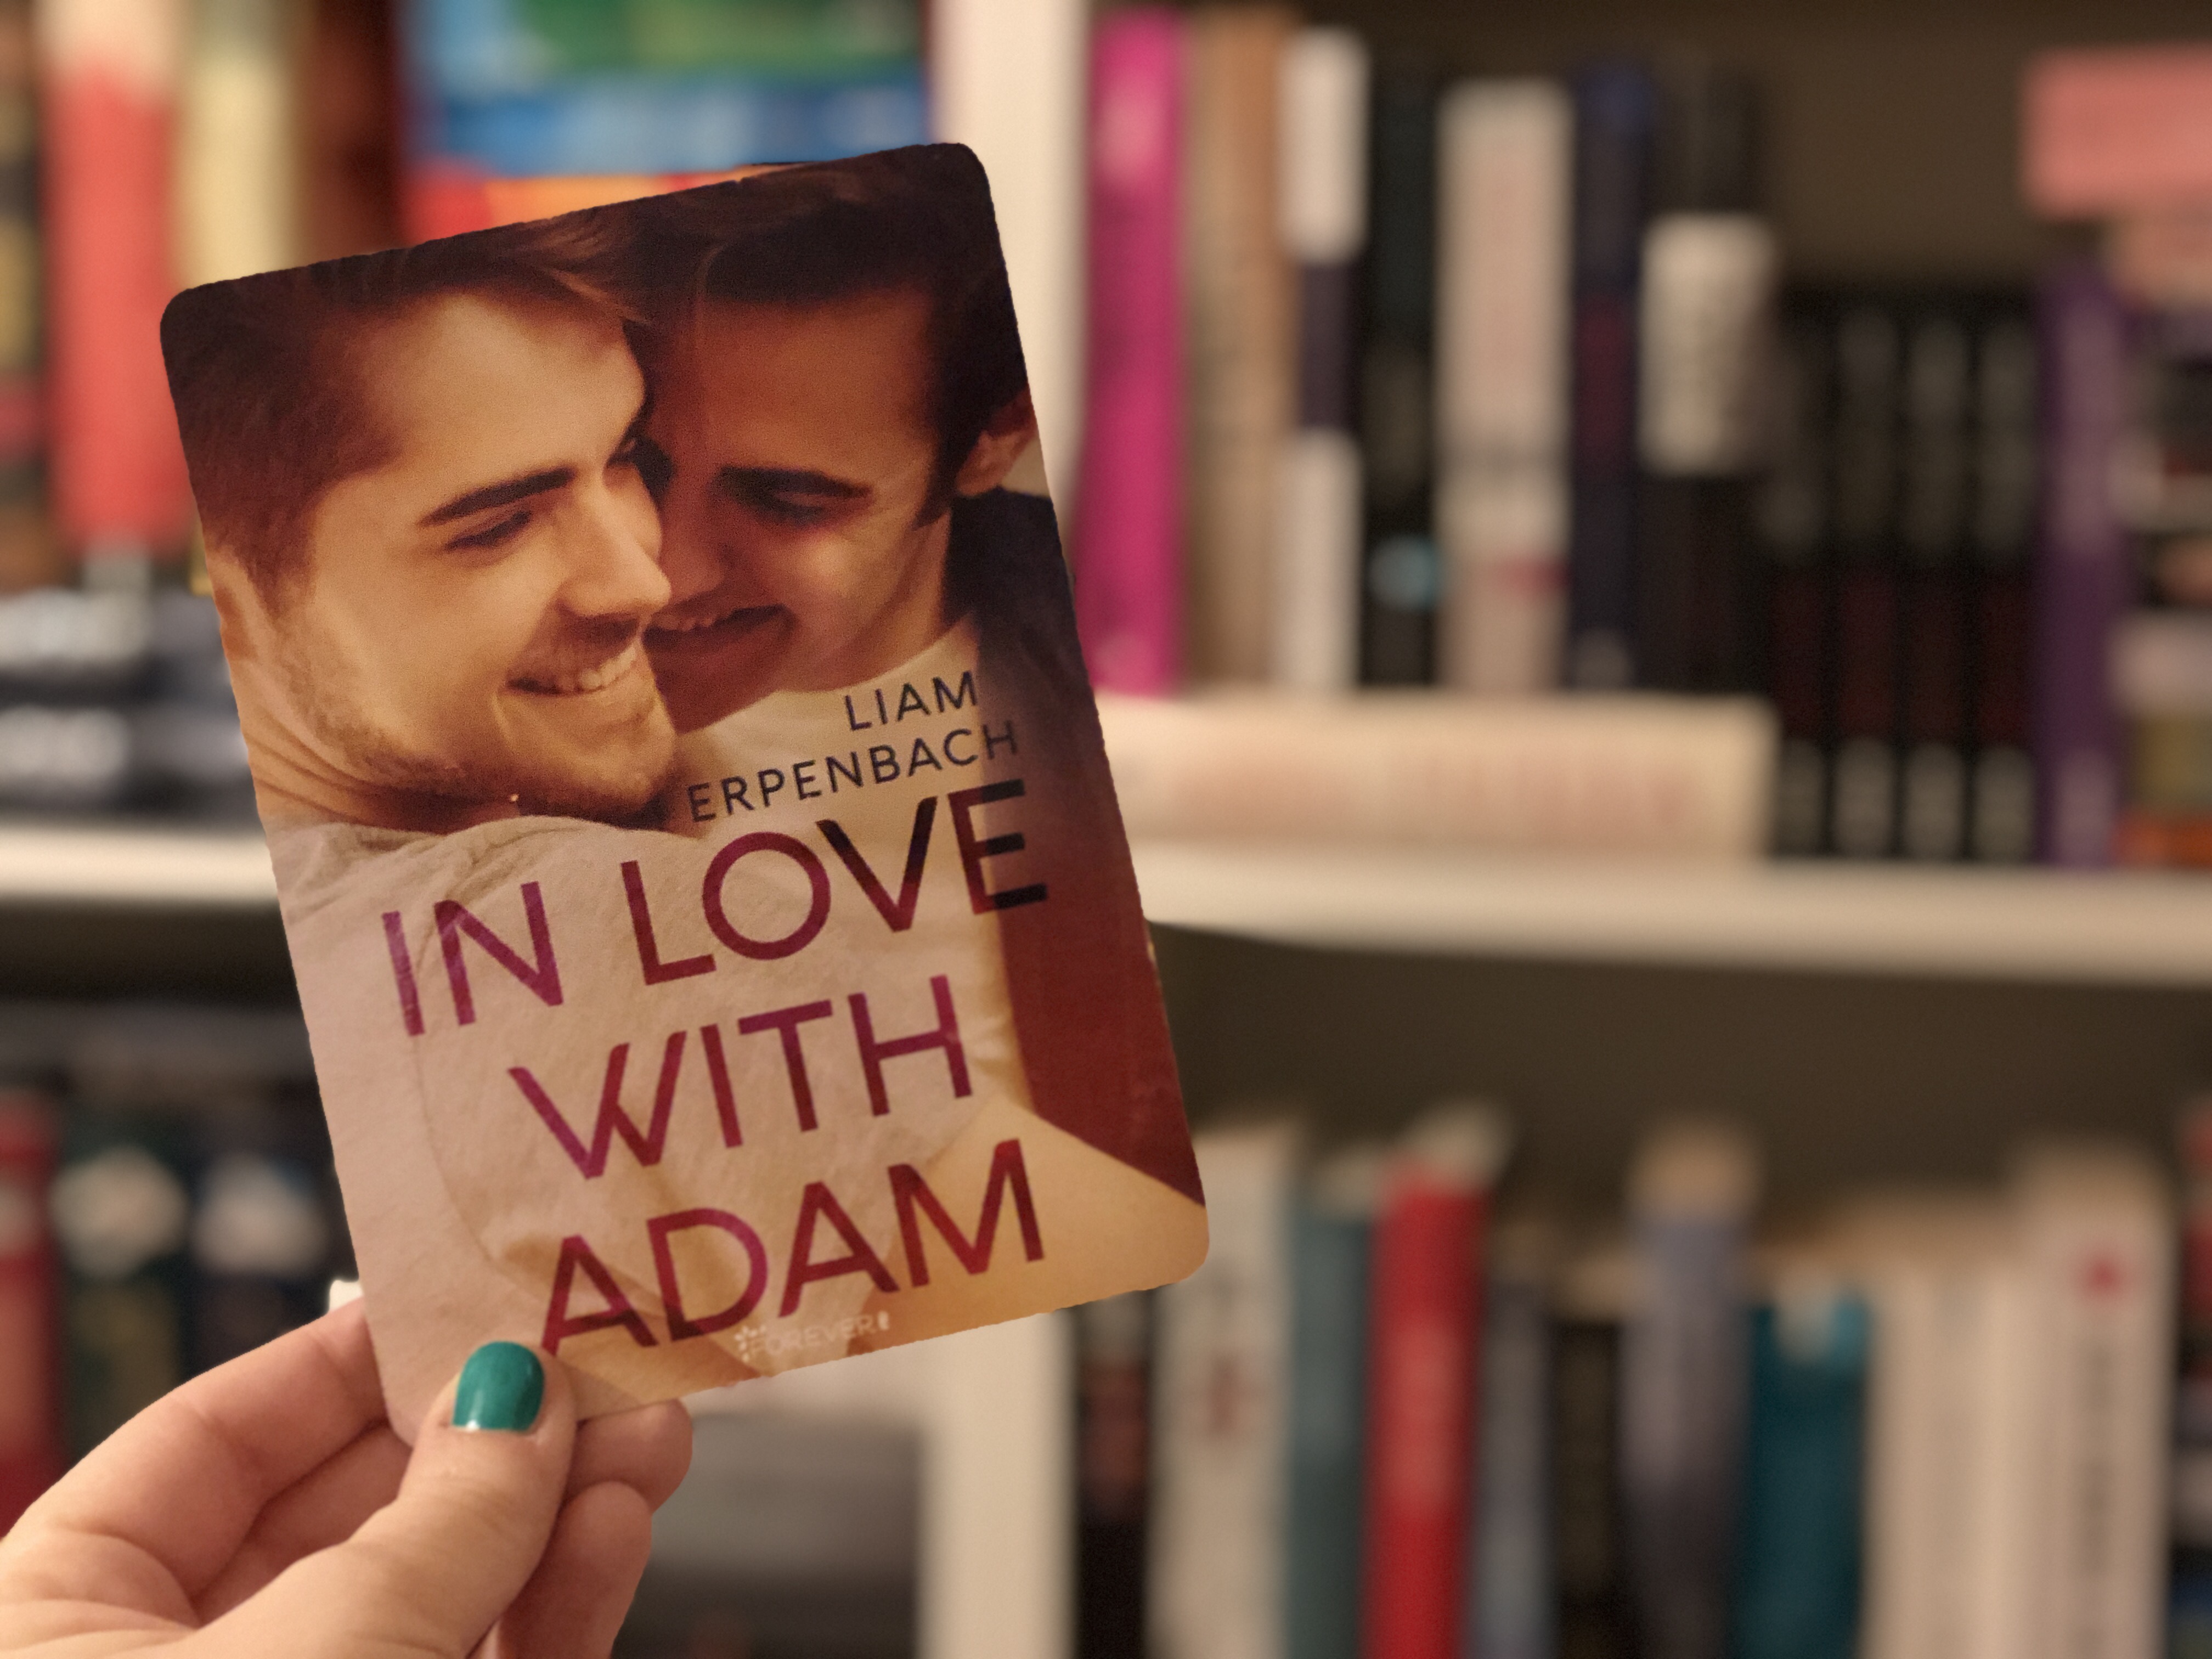 Rezension: „In Love with Adam“ von Liam Erpenbach